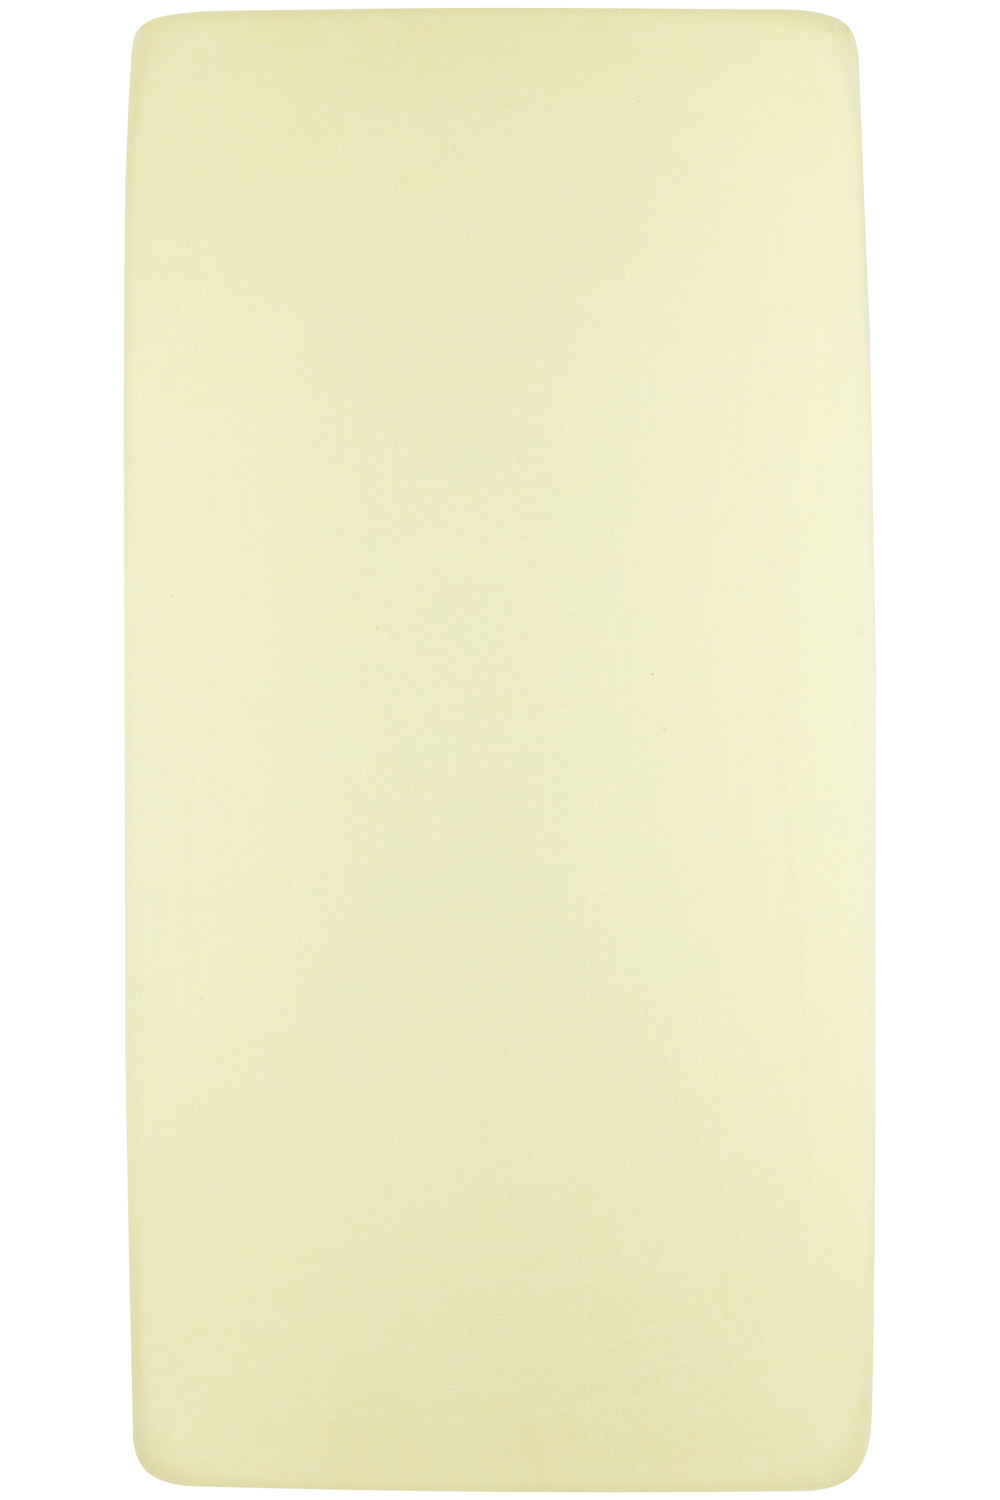 Hoeslaken juniorbed Uni - soft yellow - 70x140/150cm